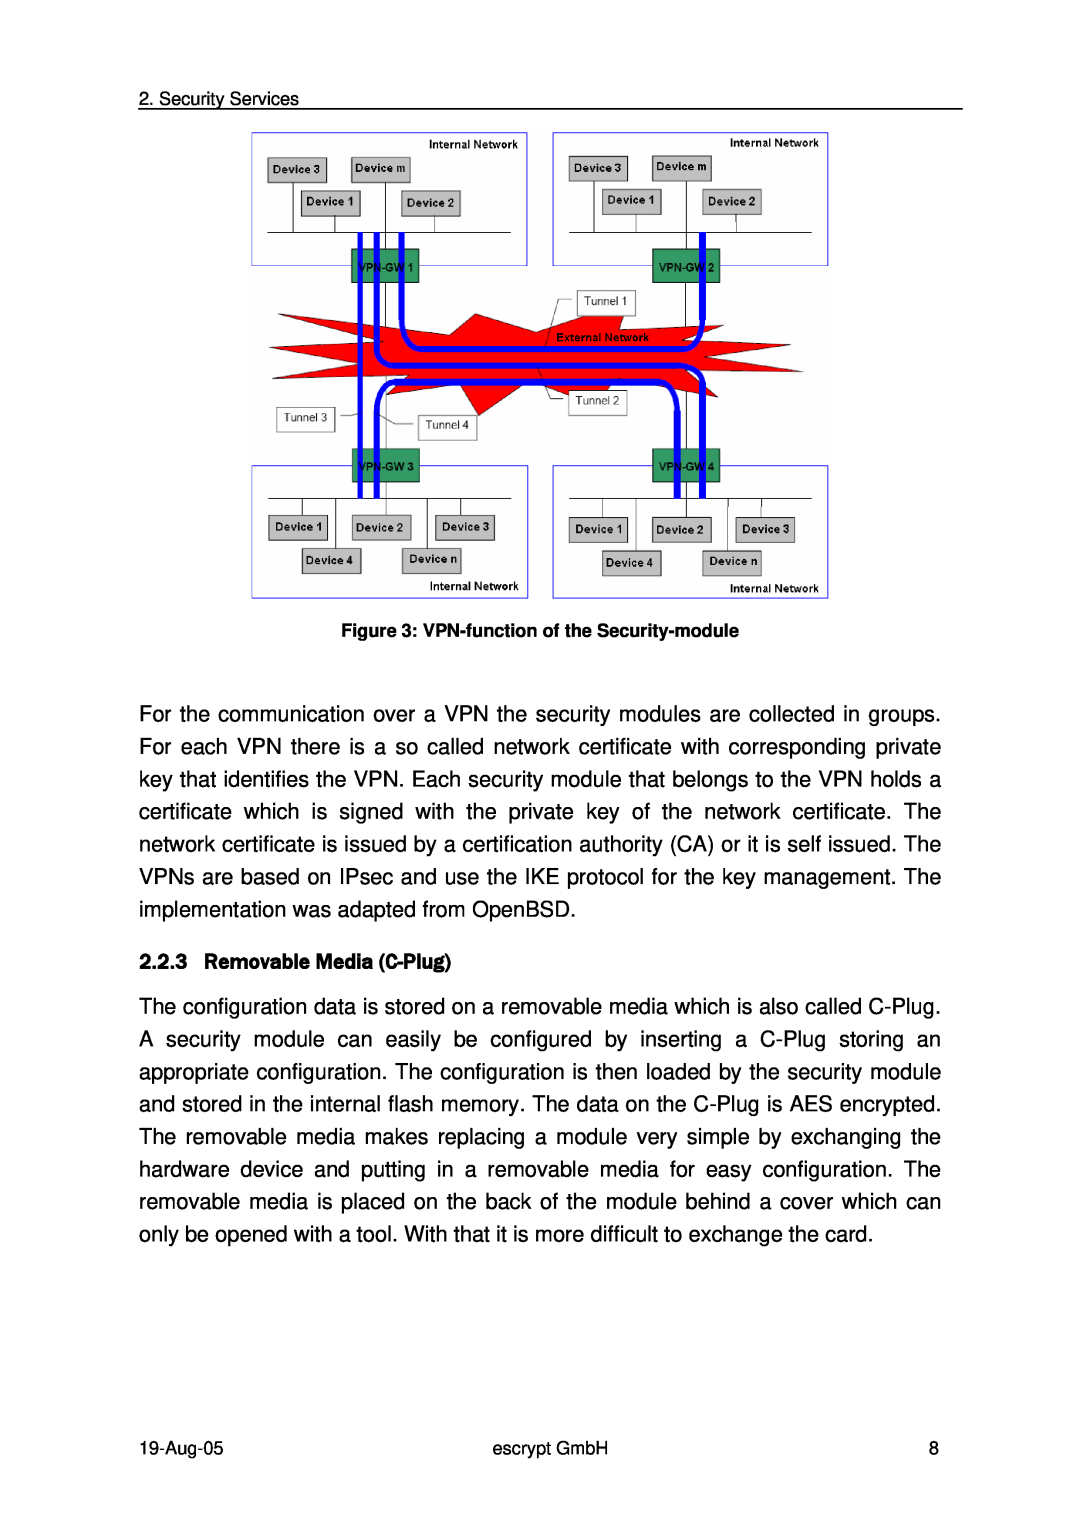 Siemens Version: 1.2 manual Removable Media C-Plug, VPN-functionof the Security-module 